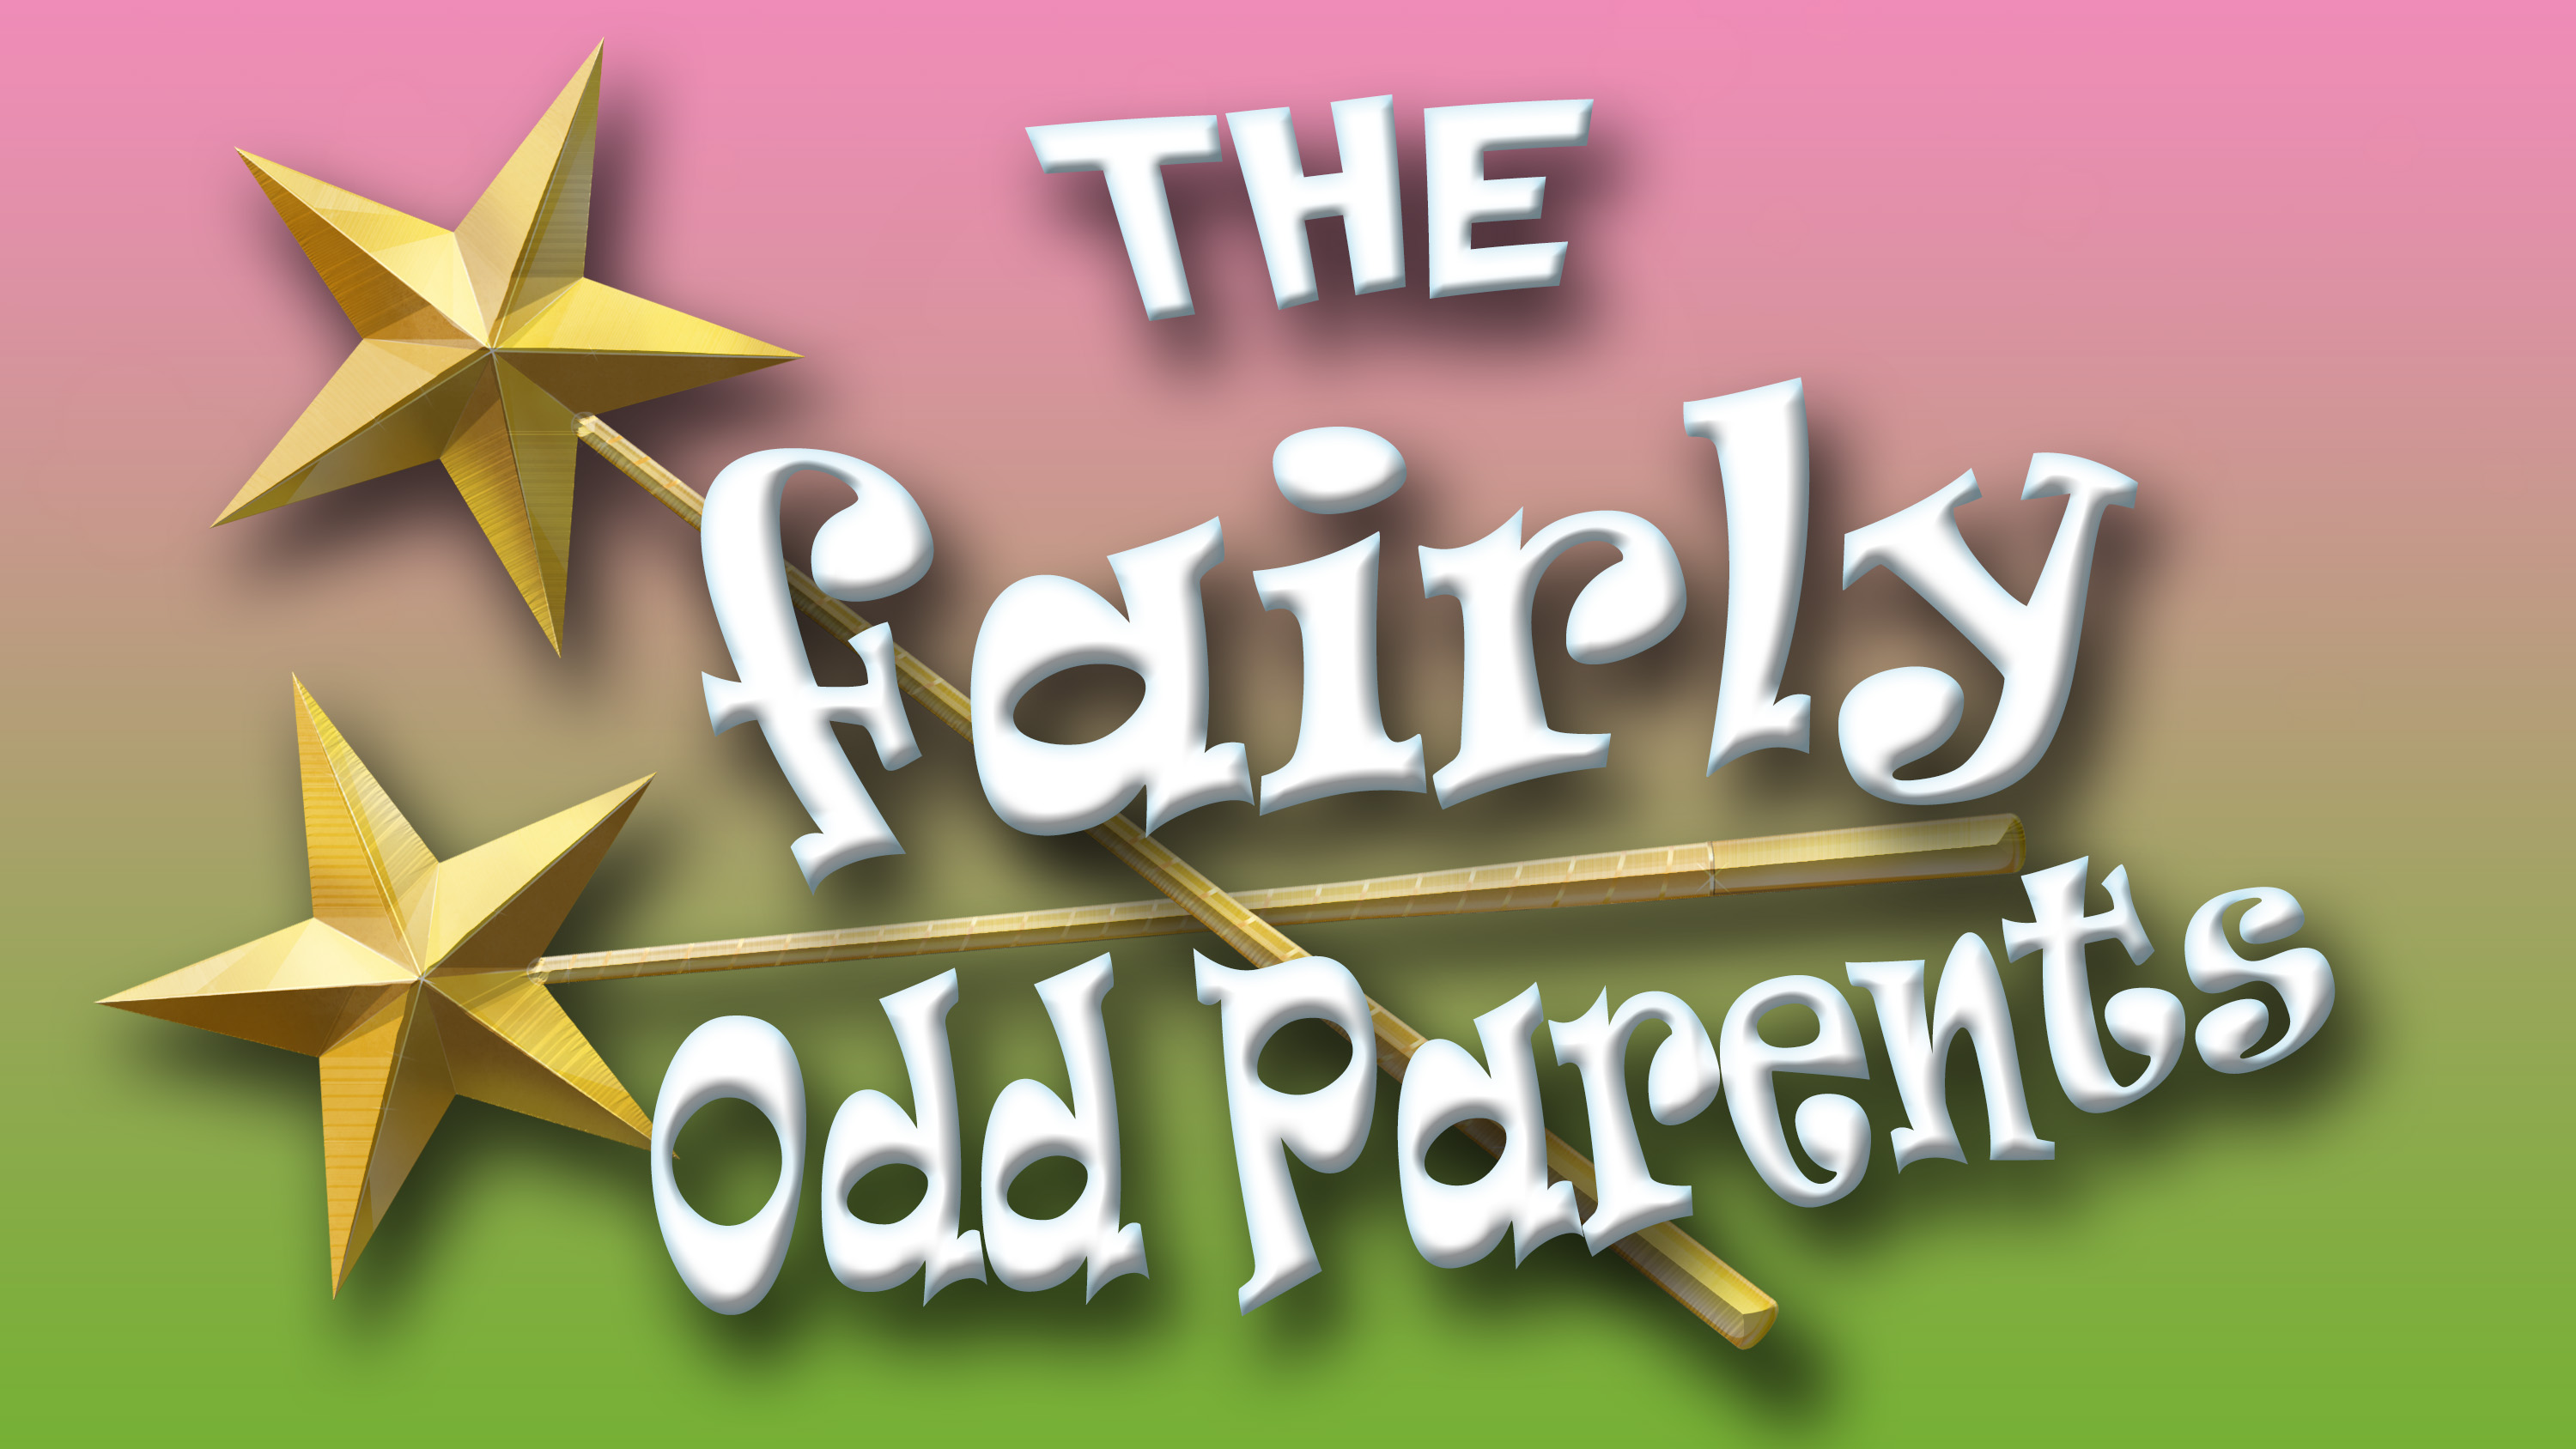 Fairly Odd Parents